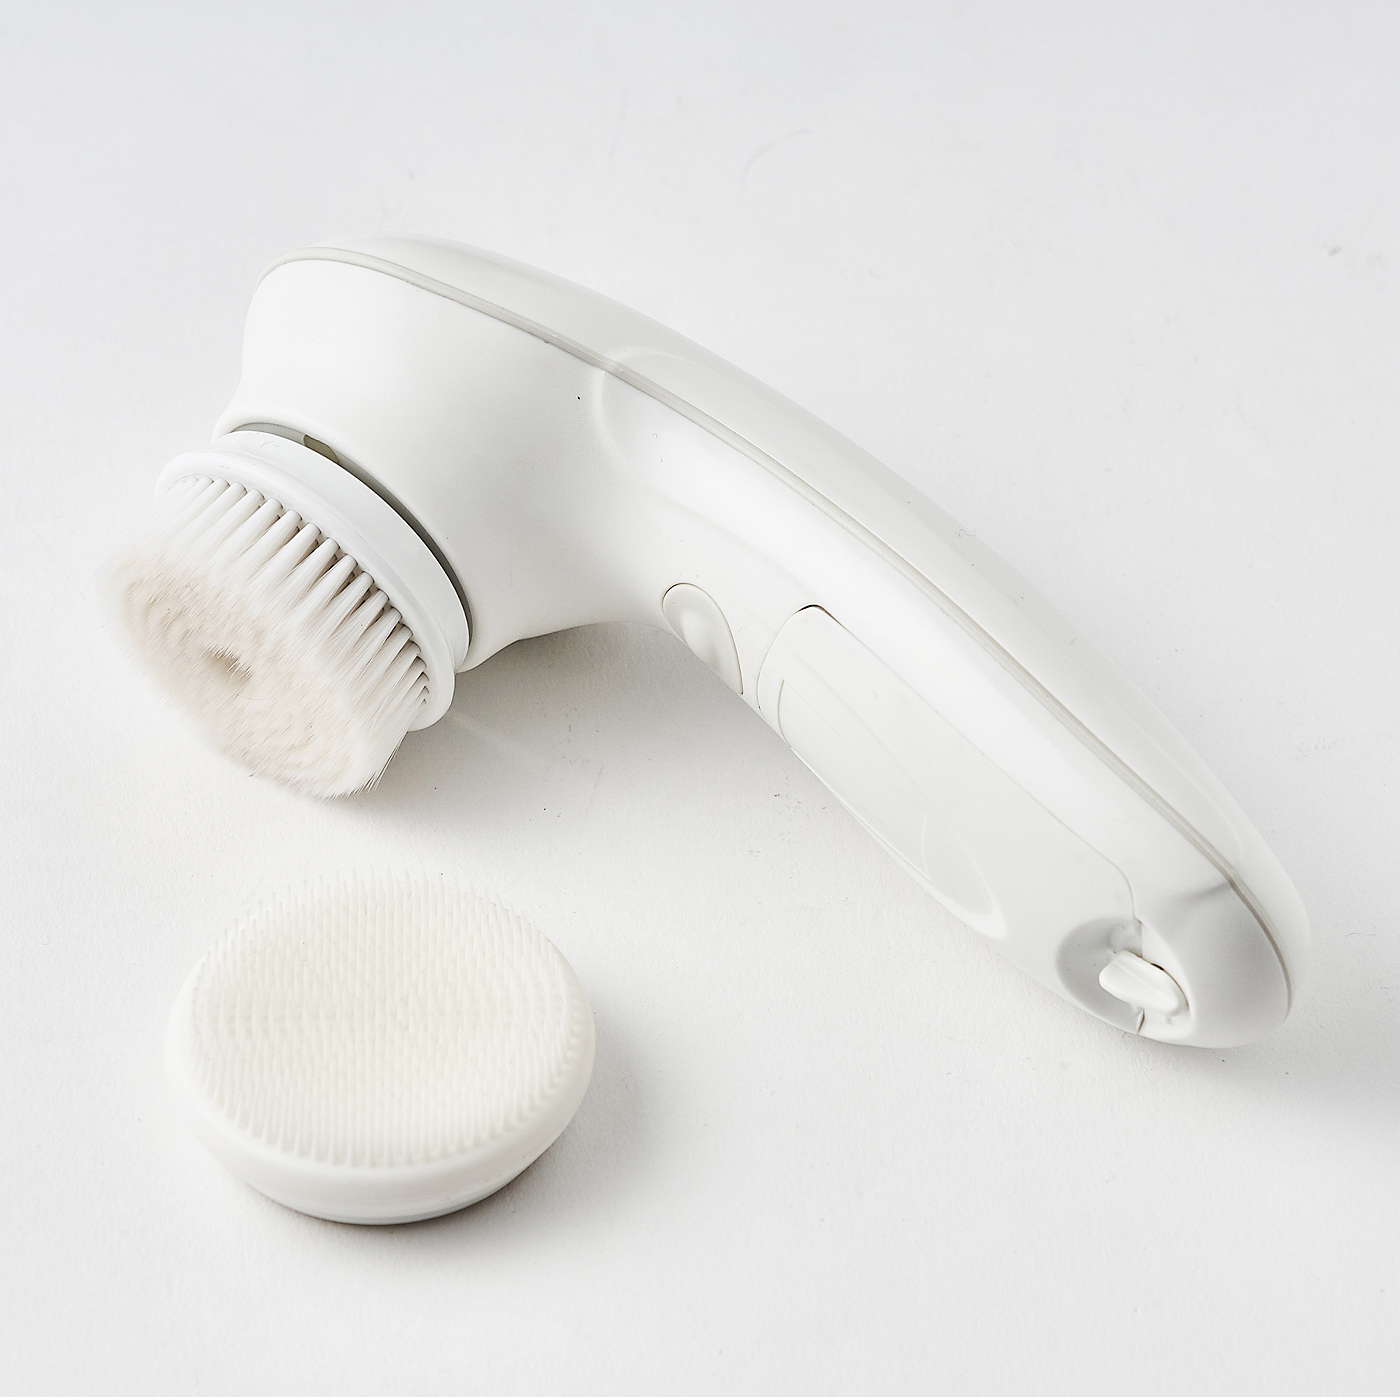 MiroPure 電動洗顔ブラシ 専用替えブラシ ホワイト KN309